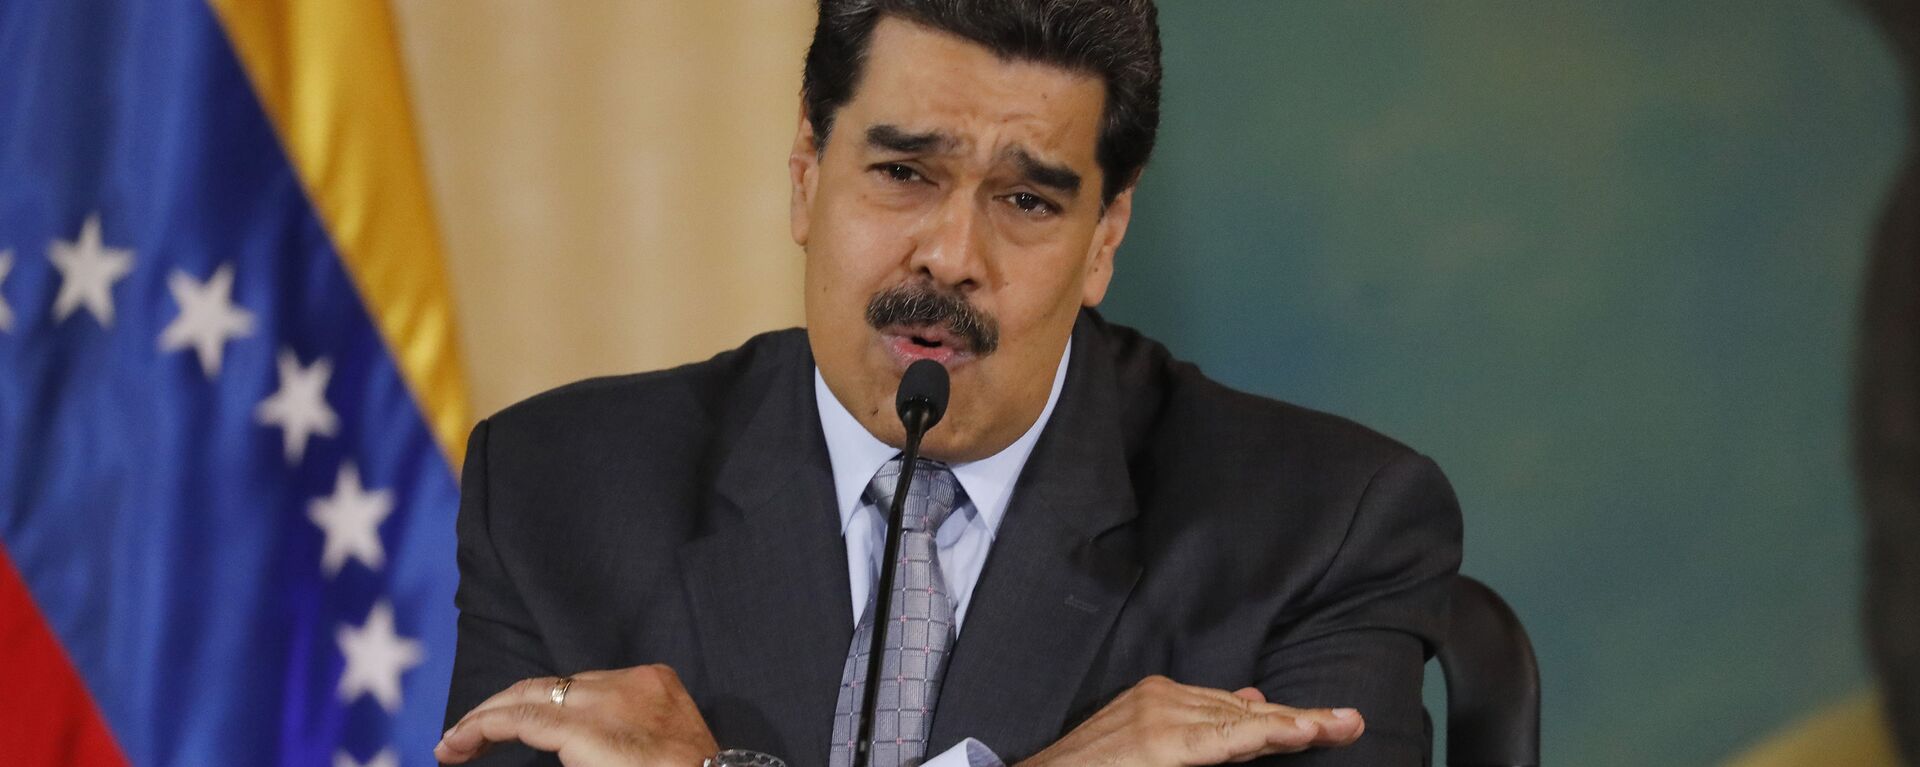 Nicolás Maduro, presidente venezolano - Sputnik Mundo, 1920, 16.04.2021